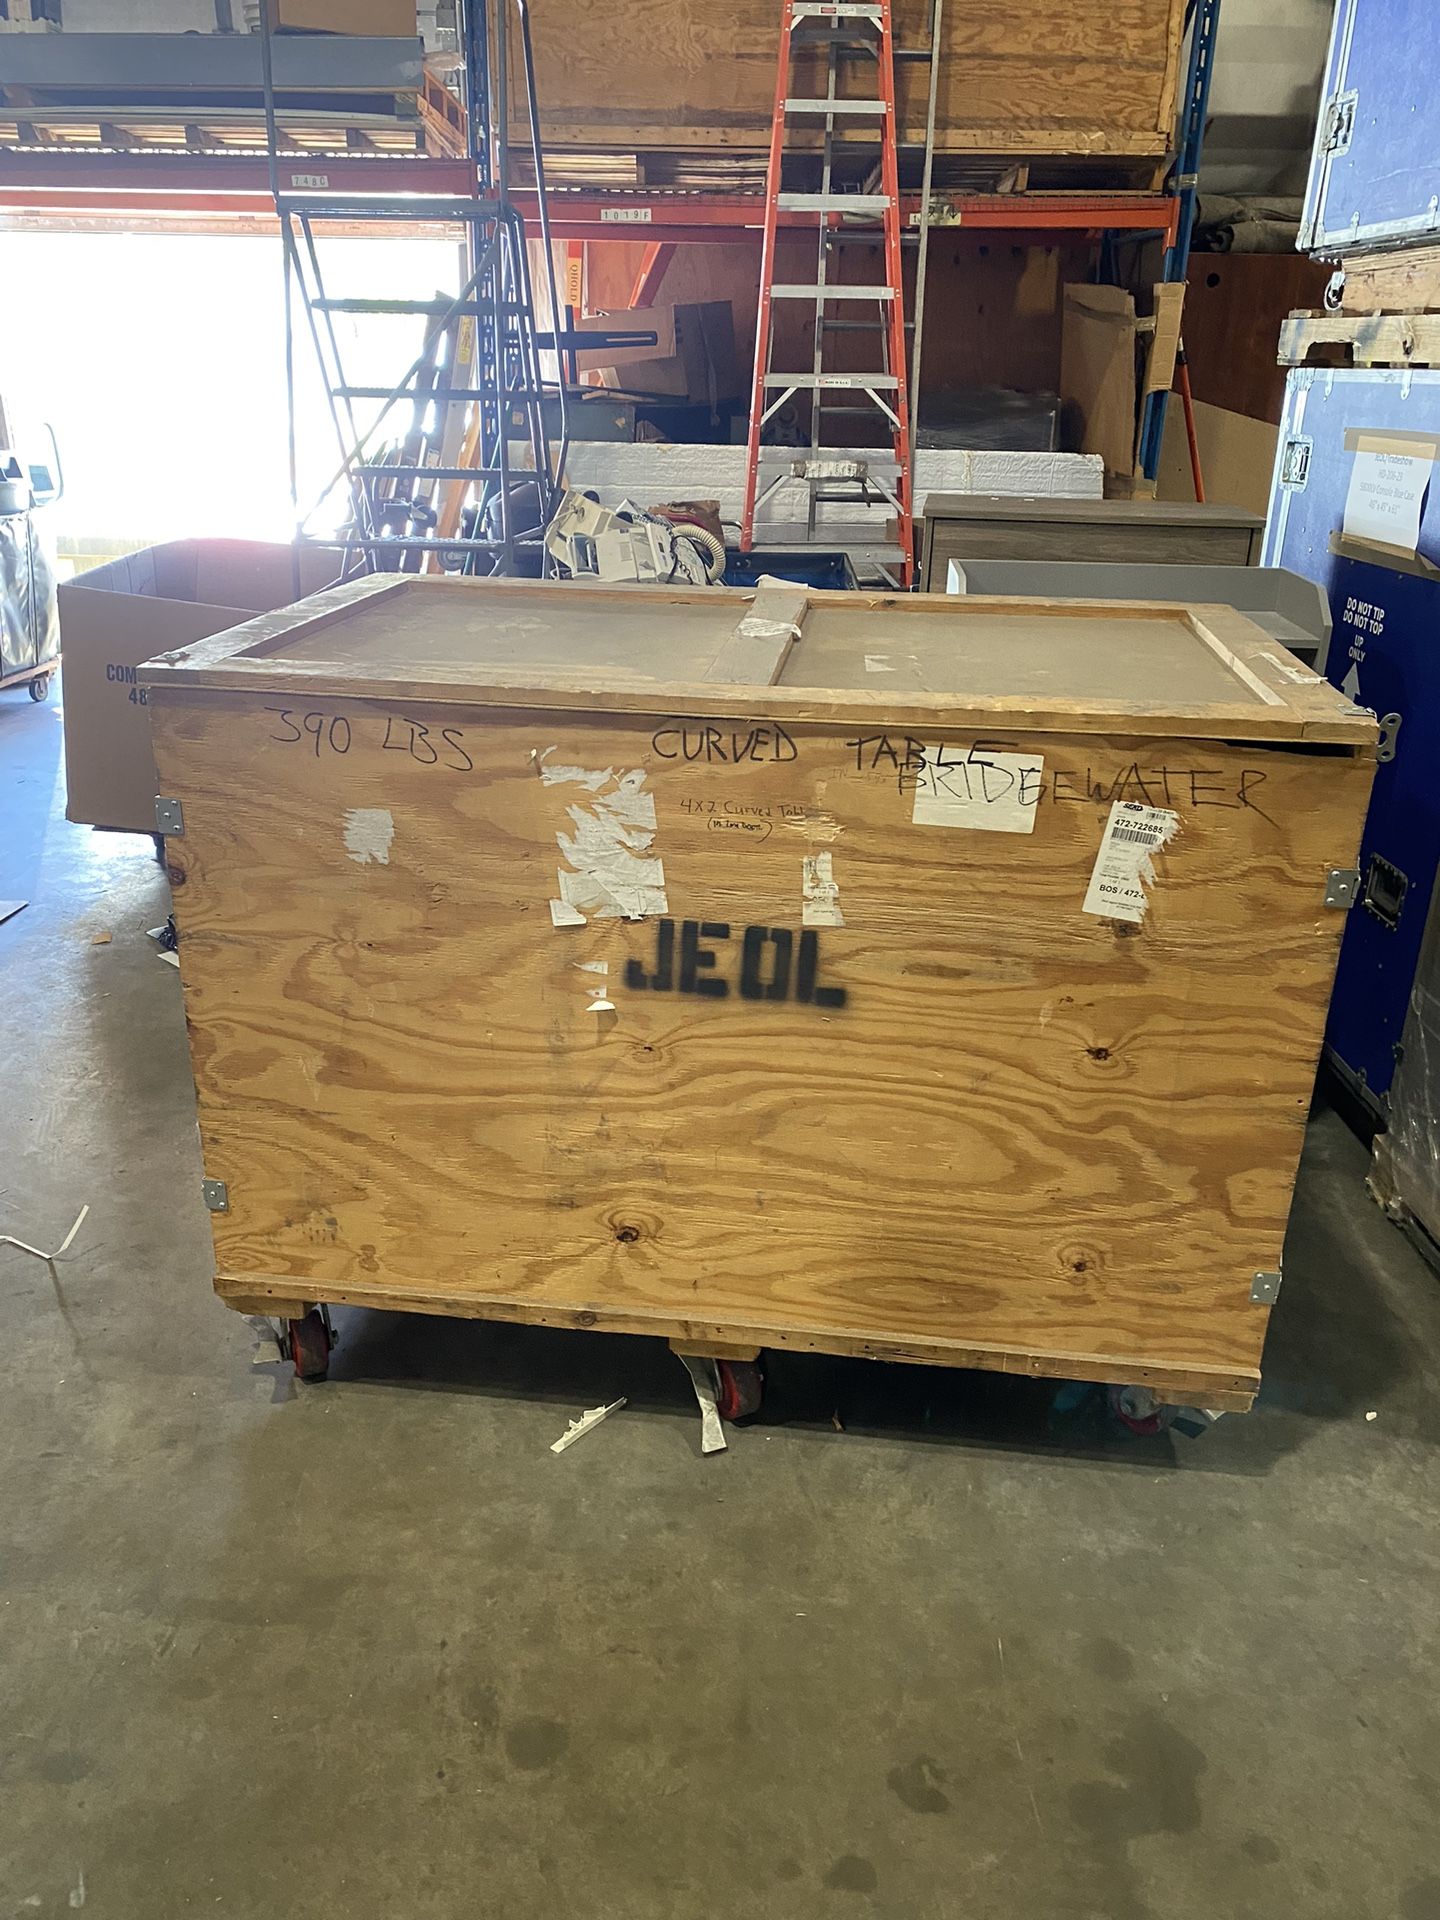 Storage Wooden Crate On Wheels 